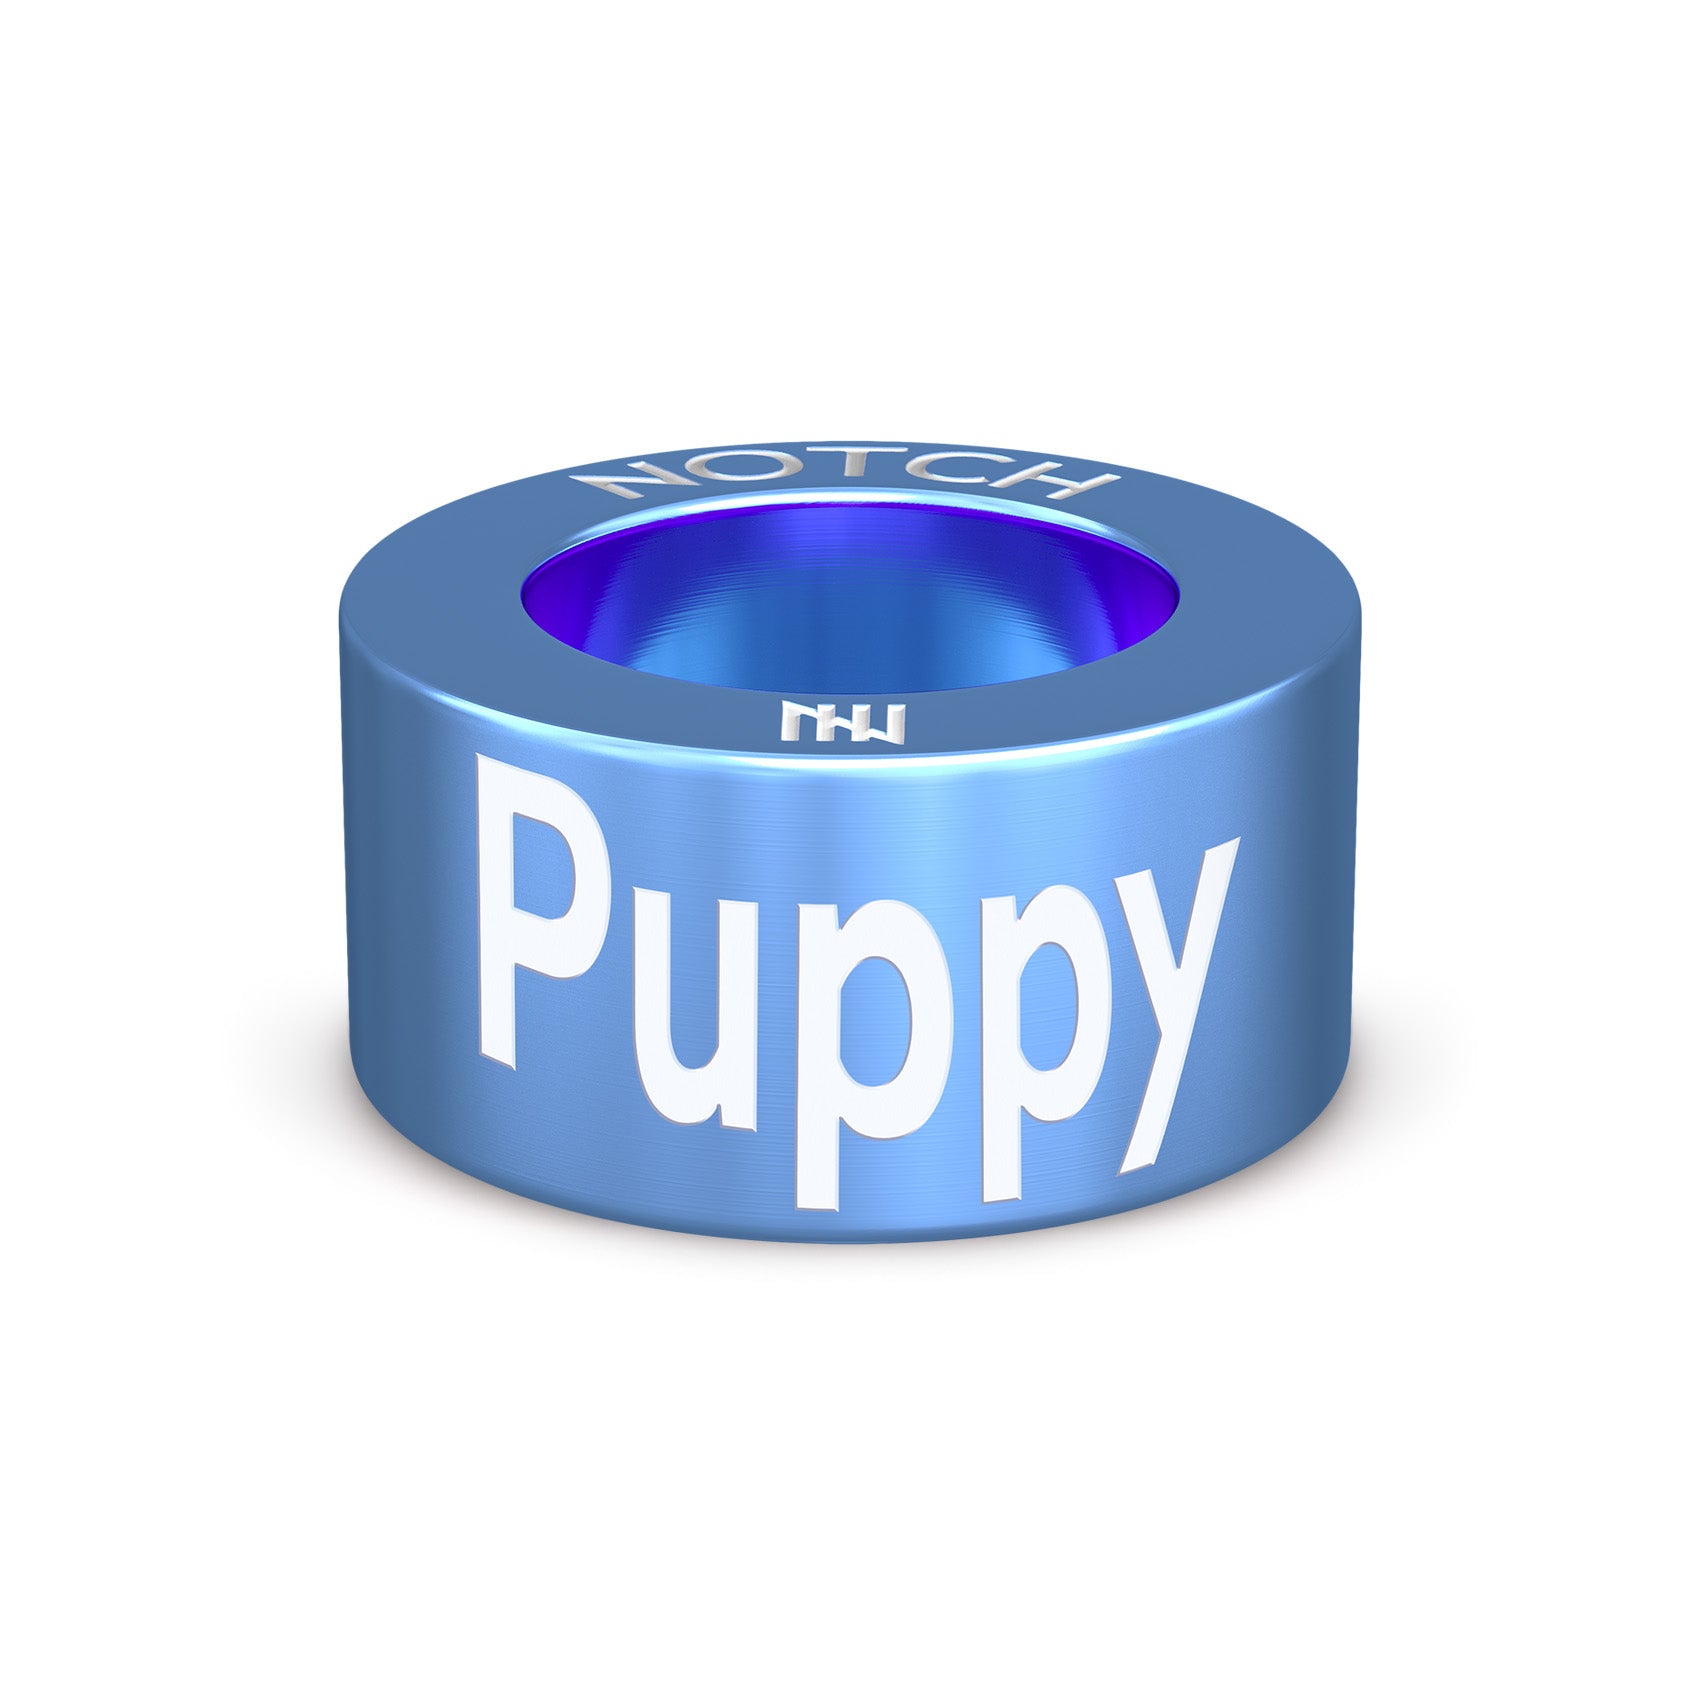 Puppy Award NOTCH Charm